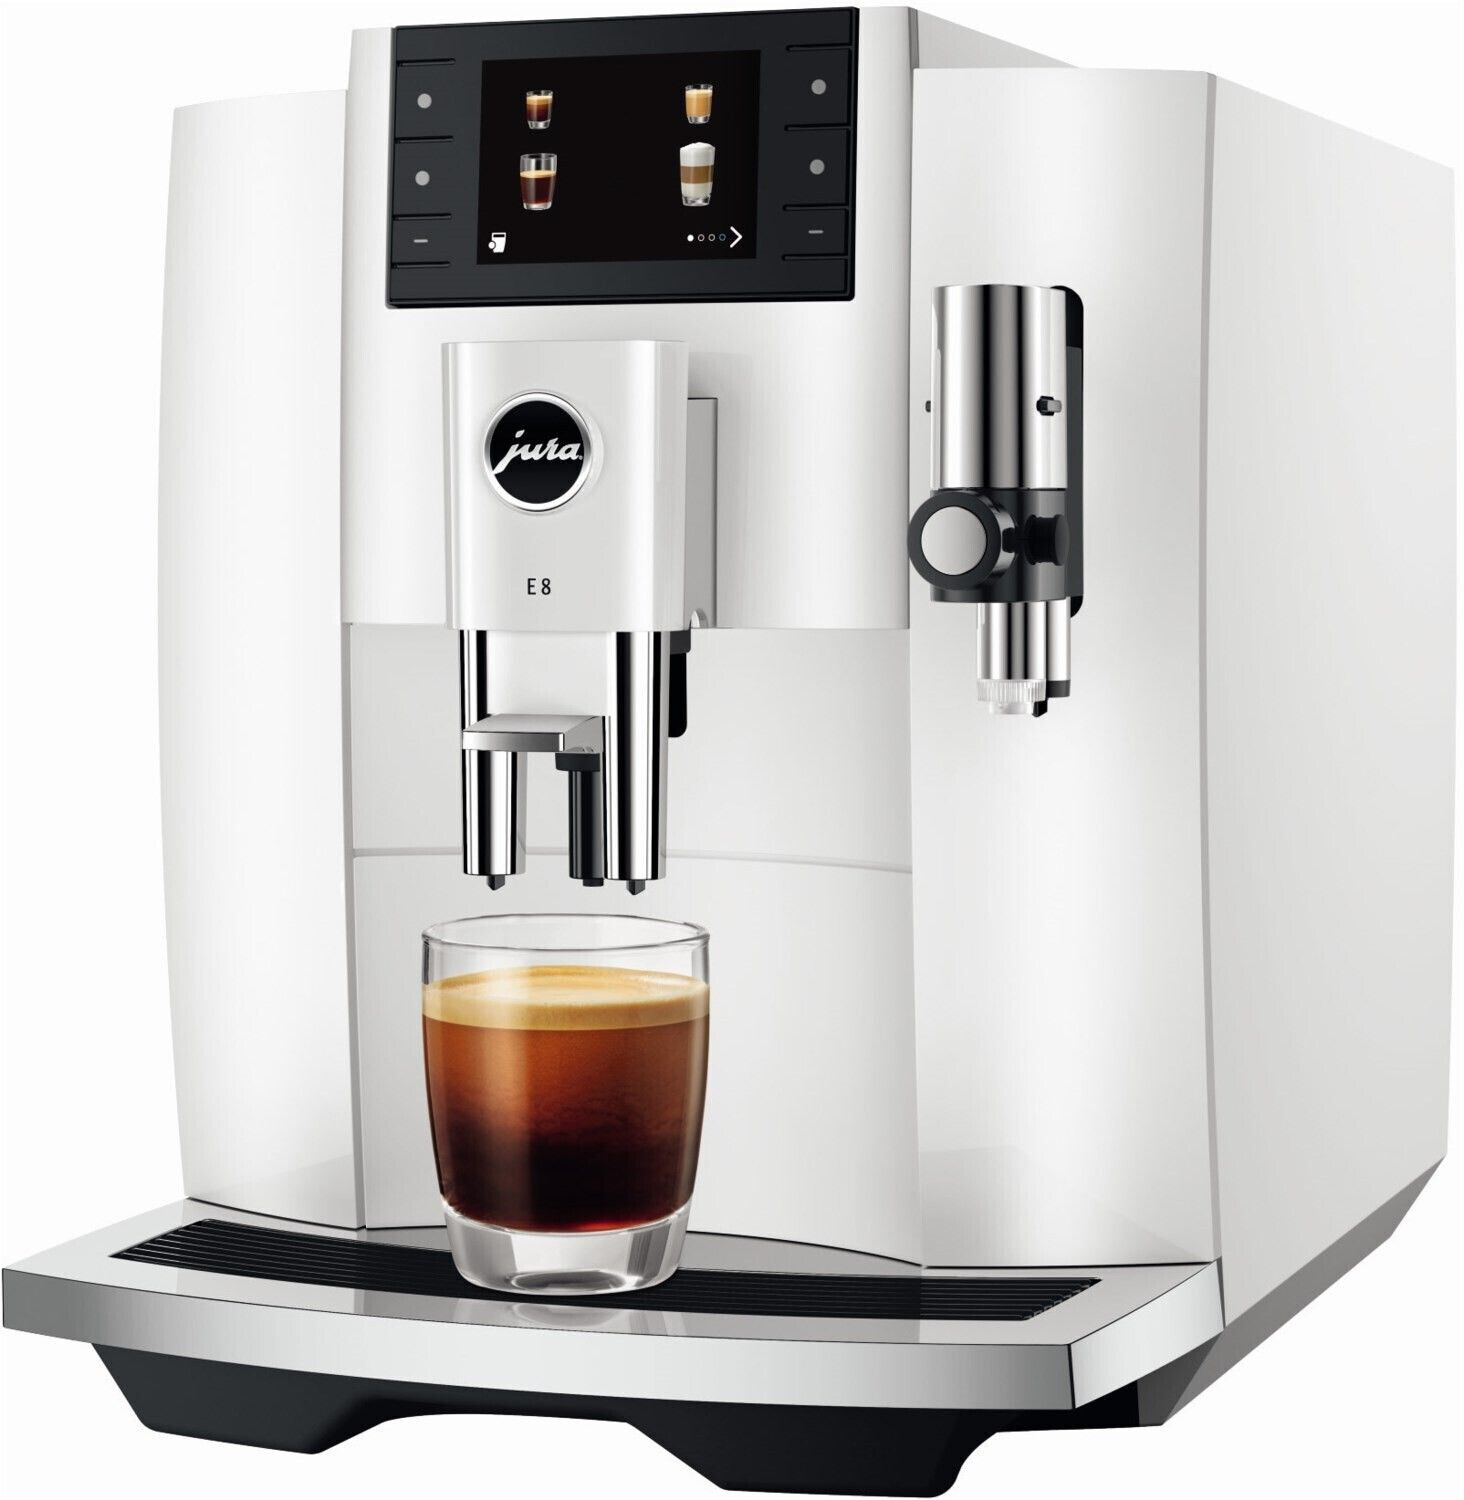 Preise) bei E8 Kaffee-Vollautomat Jura | 1.049,00 Preisvergleich (EC) 2024 (Februar € ab